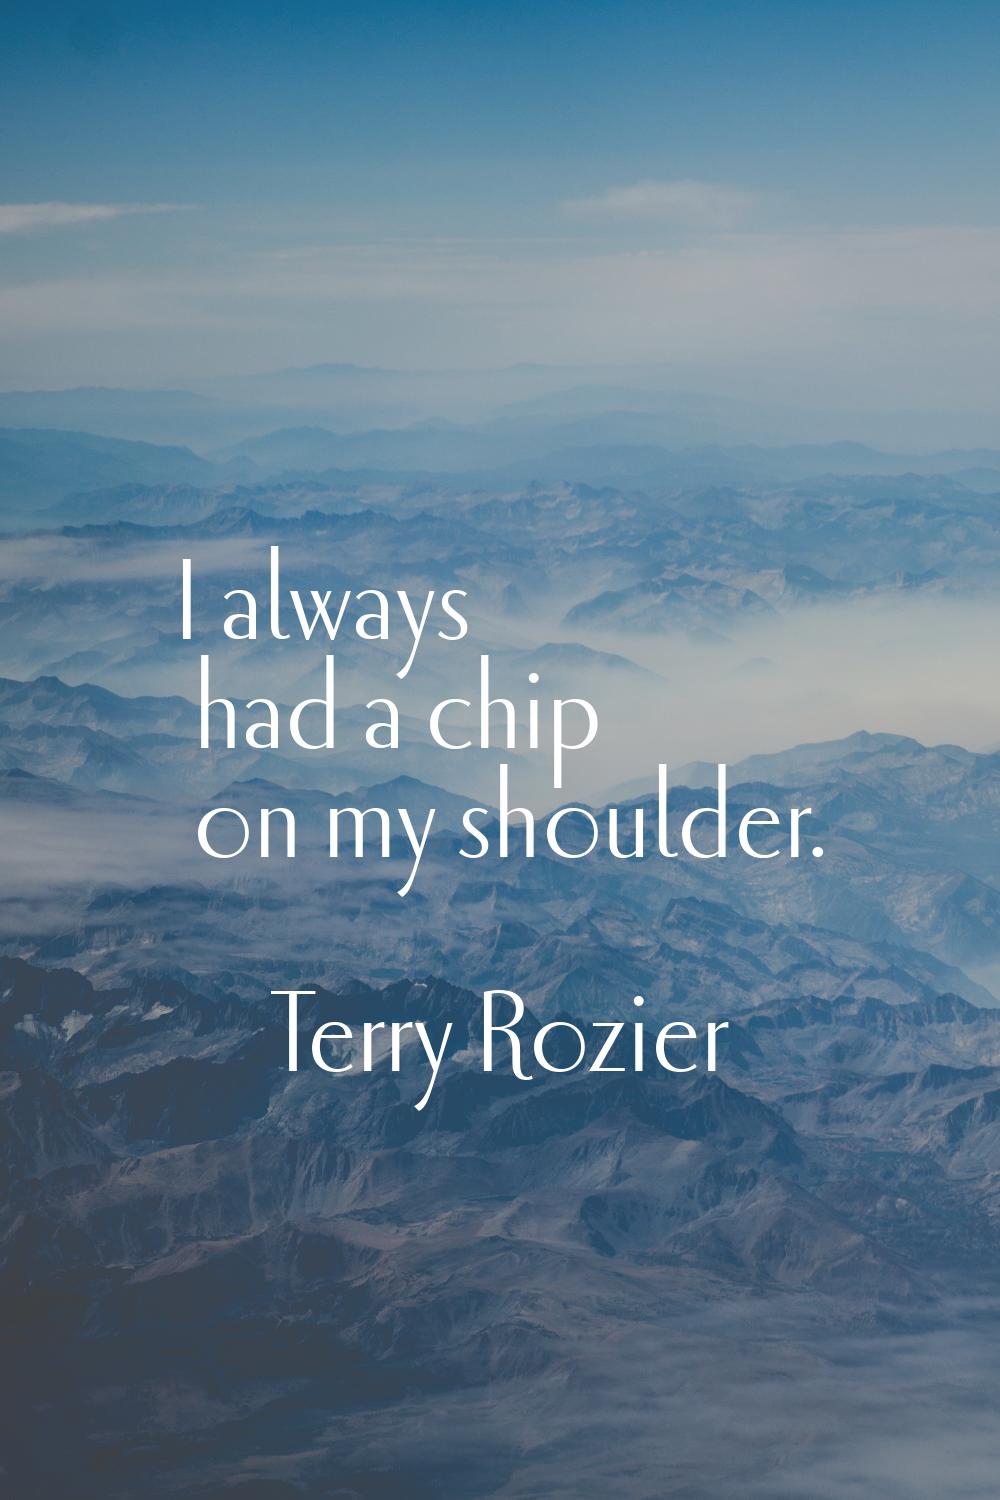 I always had a chip on my shoulder.